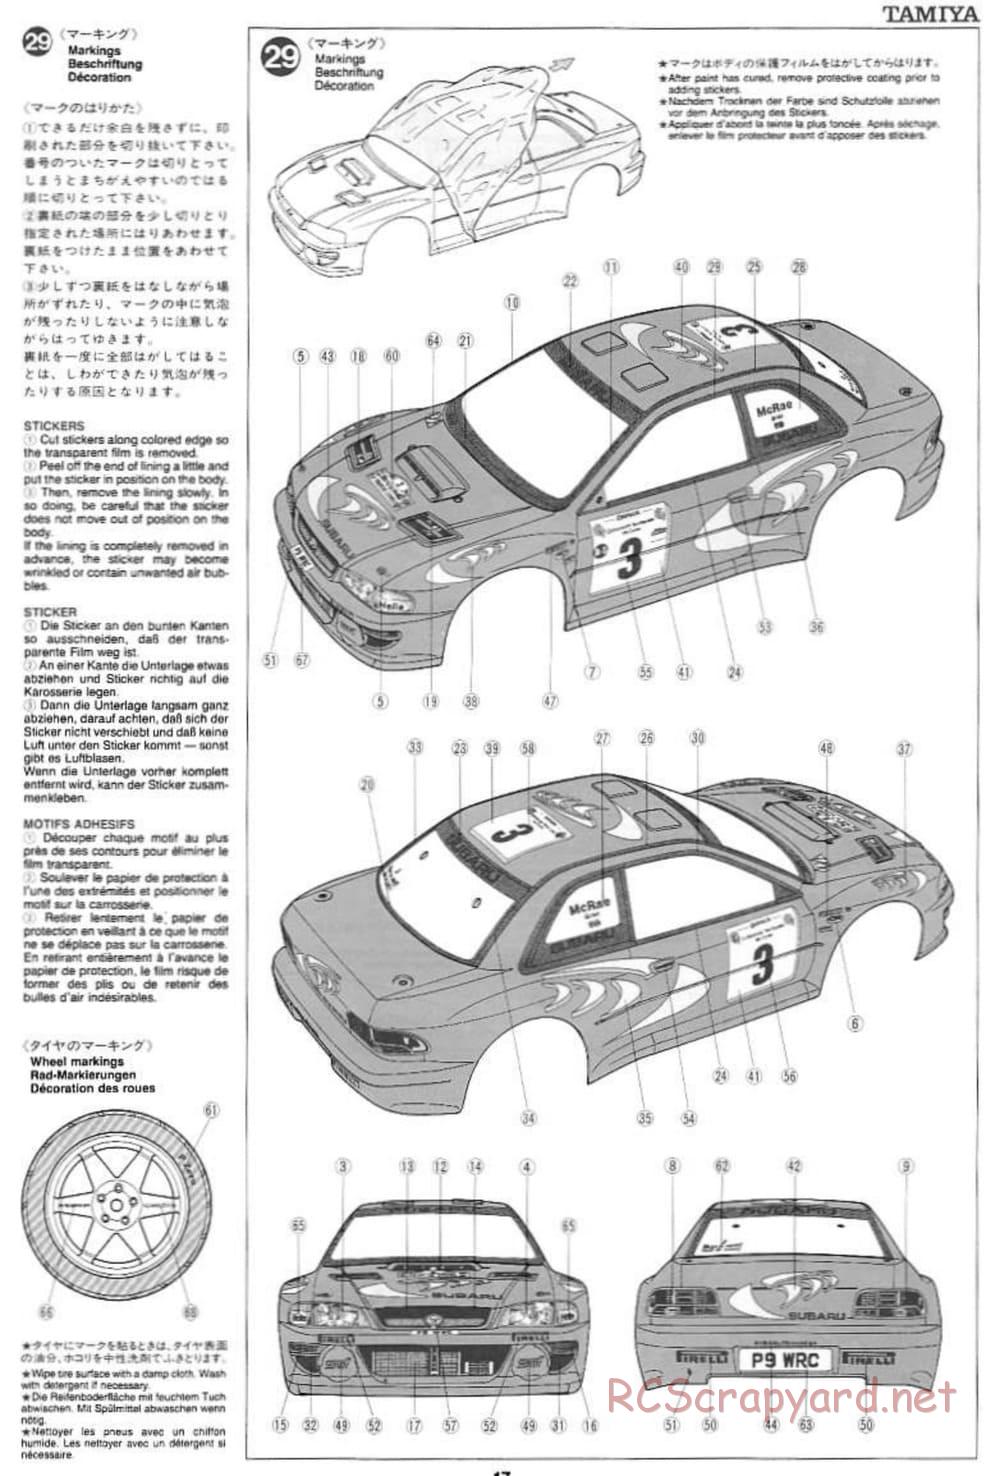 Tamiya - Subaru Impreza WRC - TL-01 Chassis - Manual - Page 17